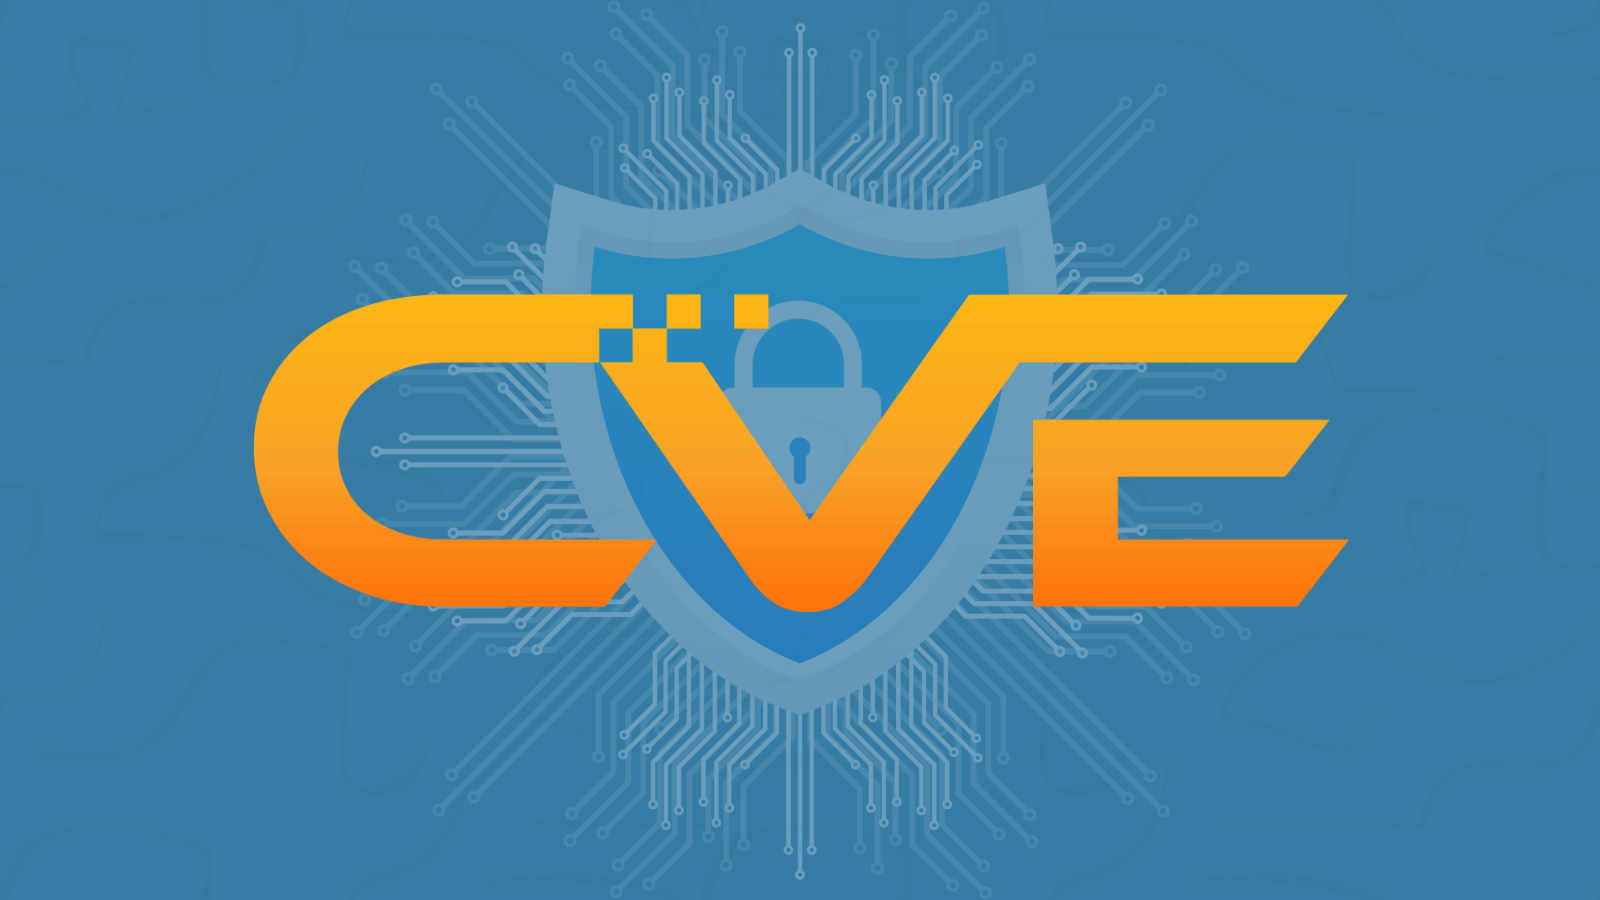 CVE, or Common Vulnerabilities and Exposures